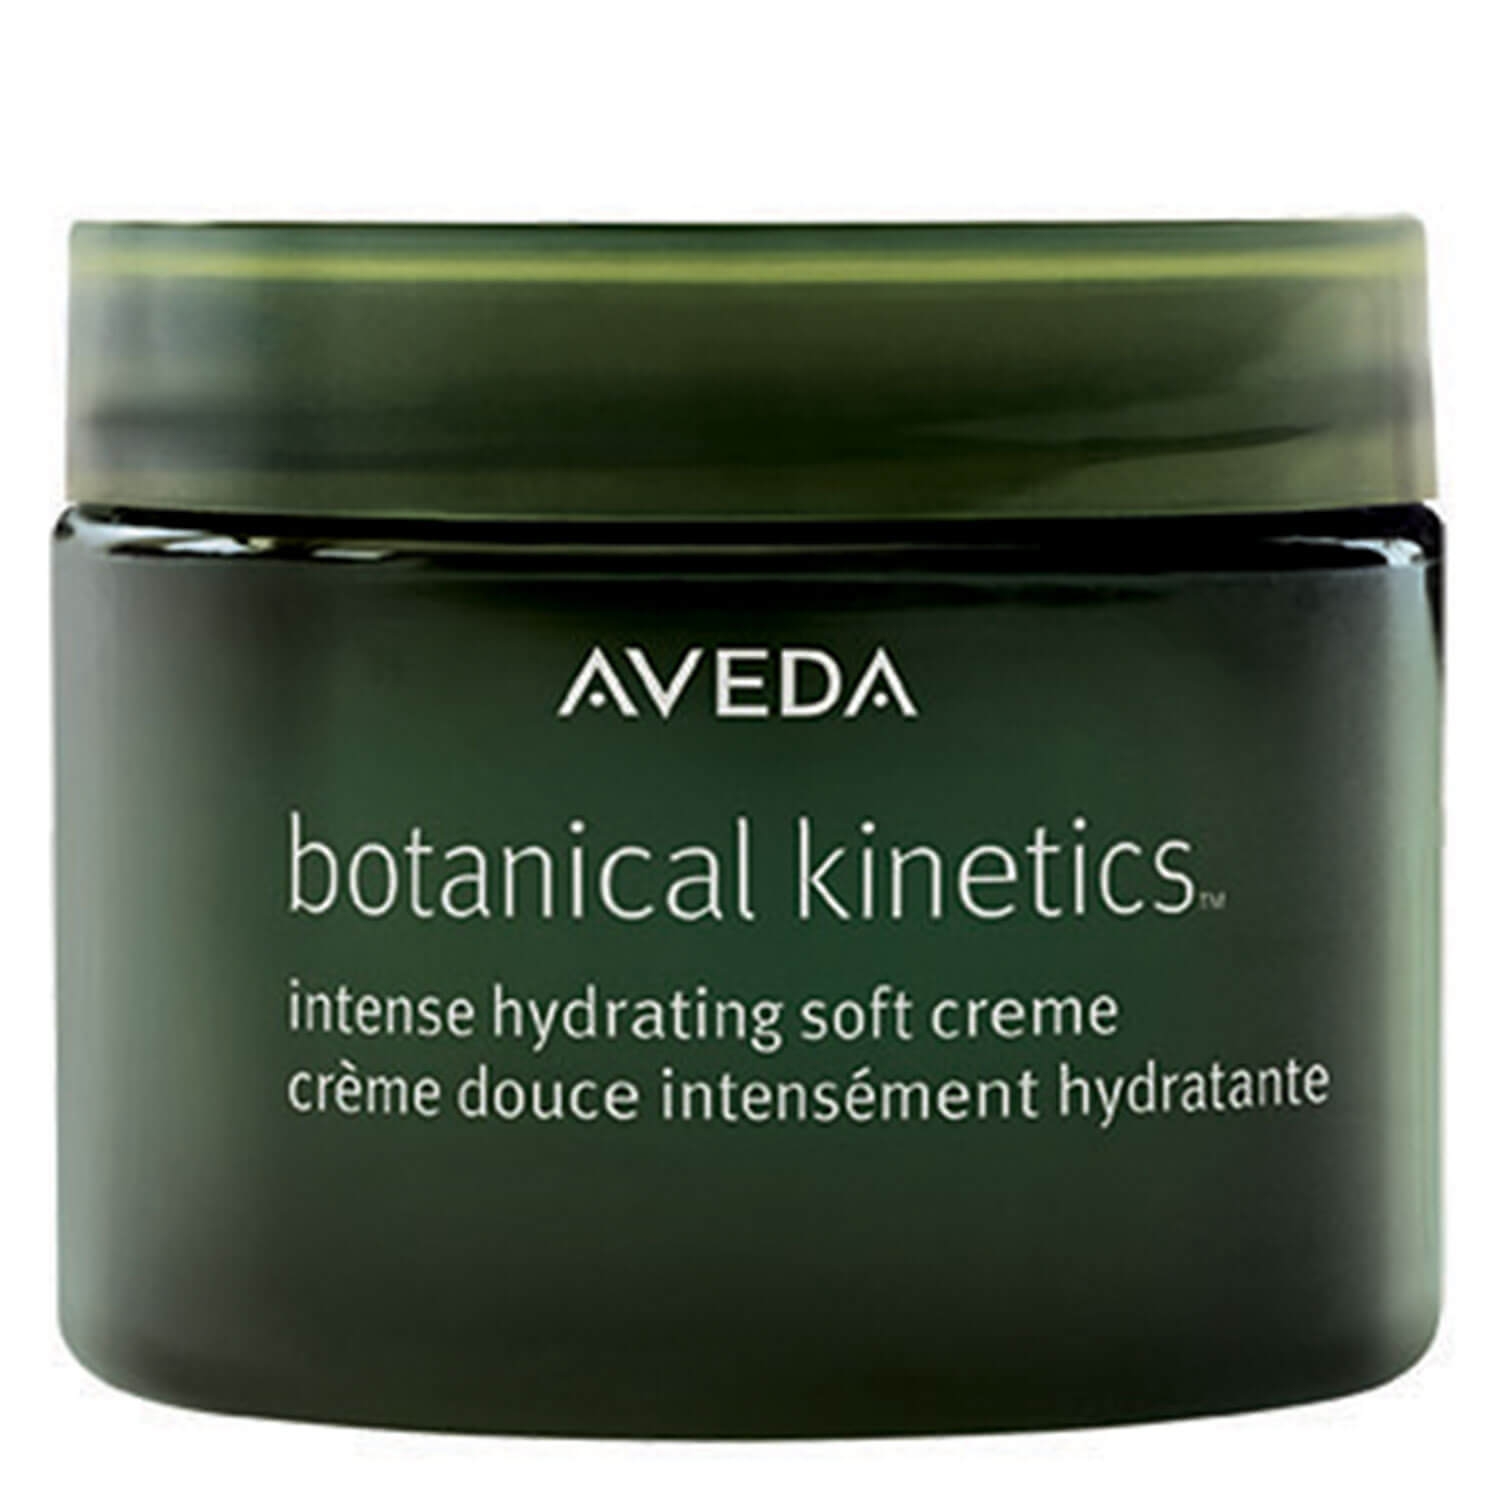 Image du produit de botanical kinetics - intense hydrating soft creme